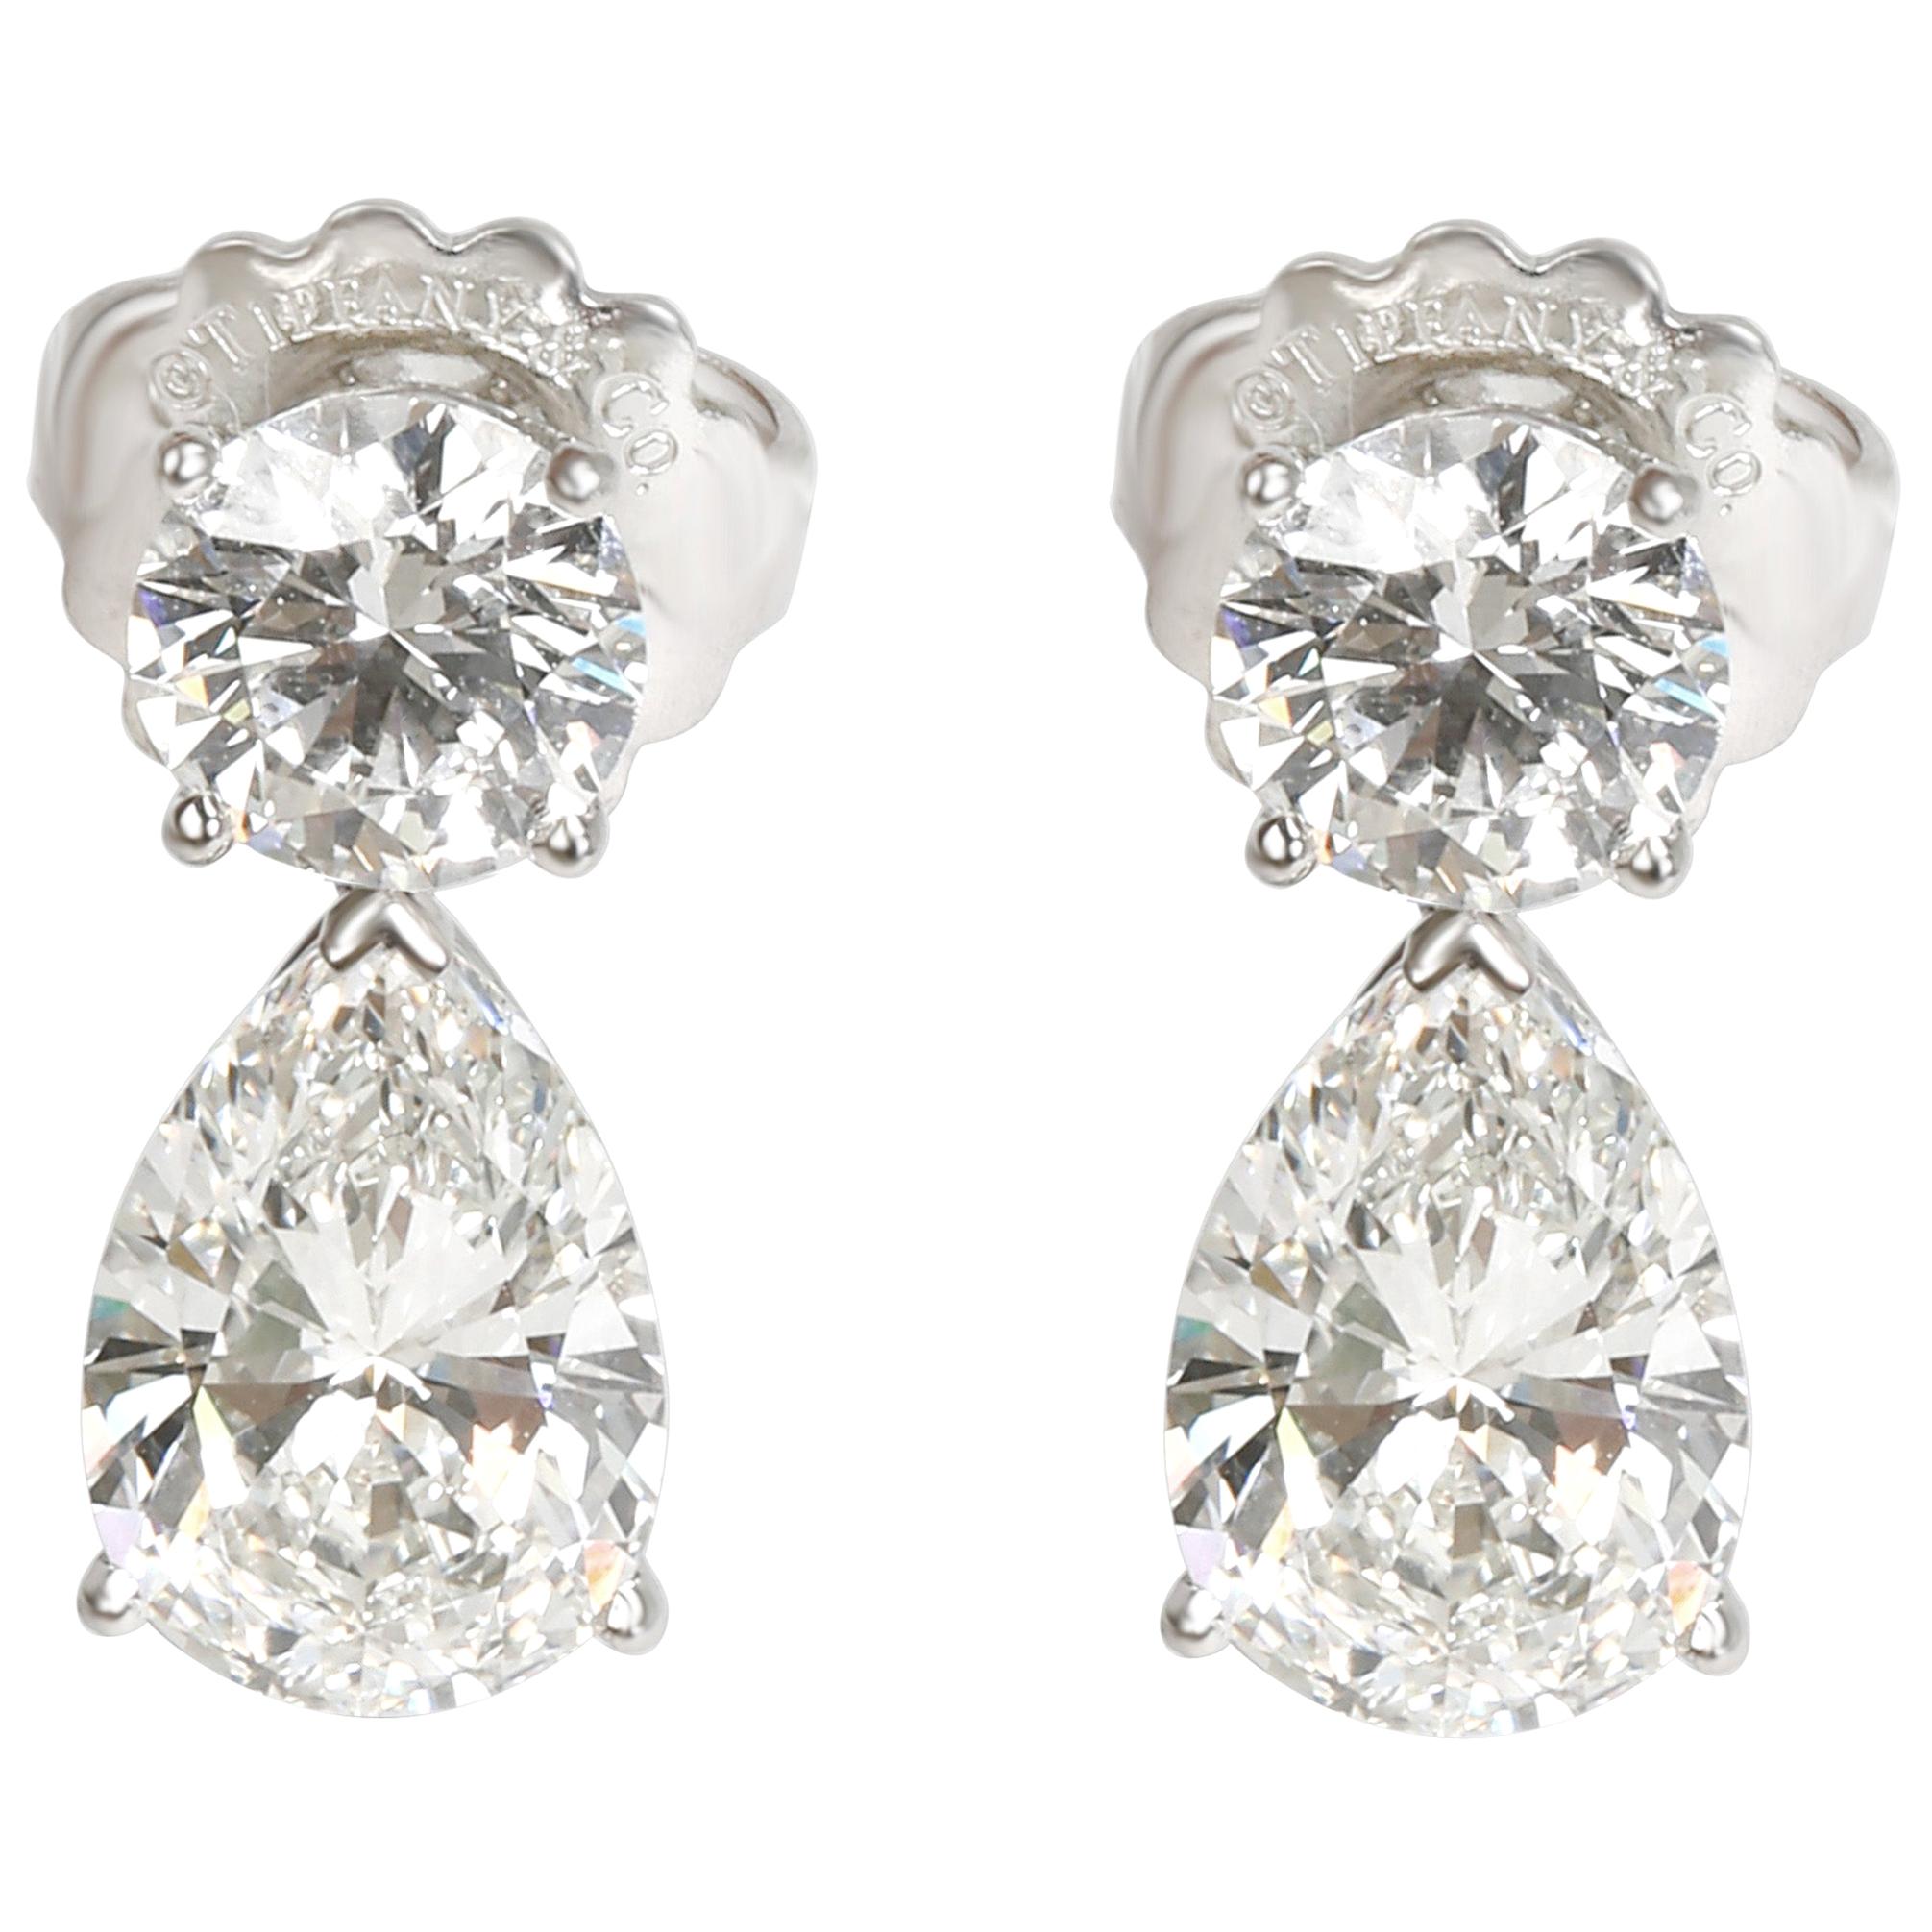 Tiffany & Co. Diamond Teardrop Earring in Platinum GIA Certified 6.69 Carat